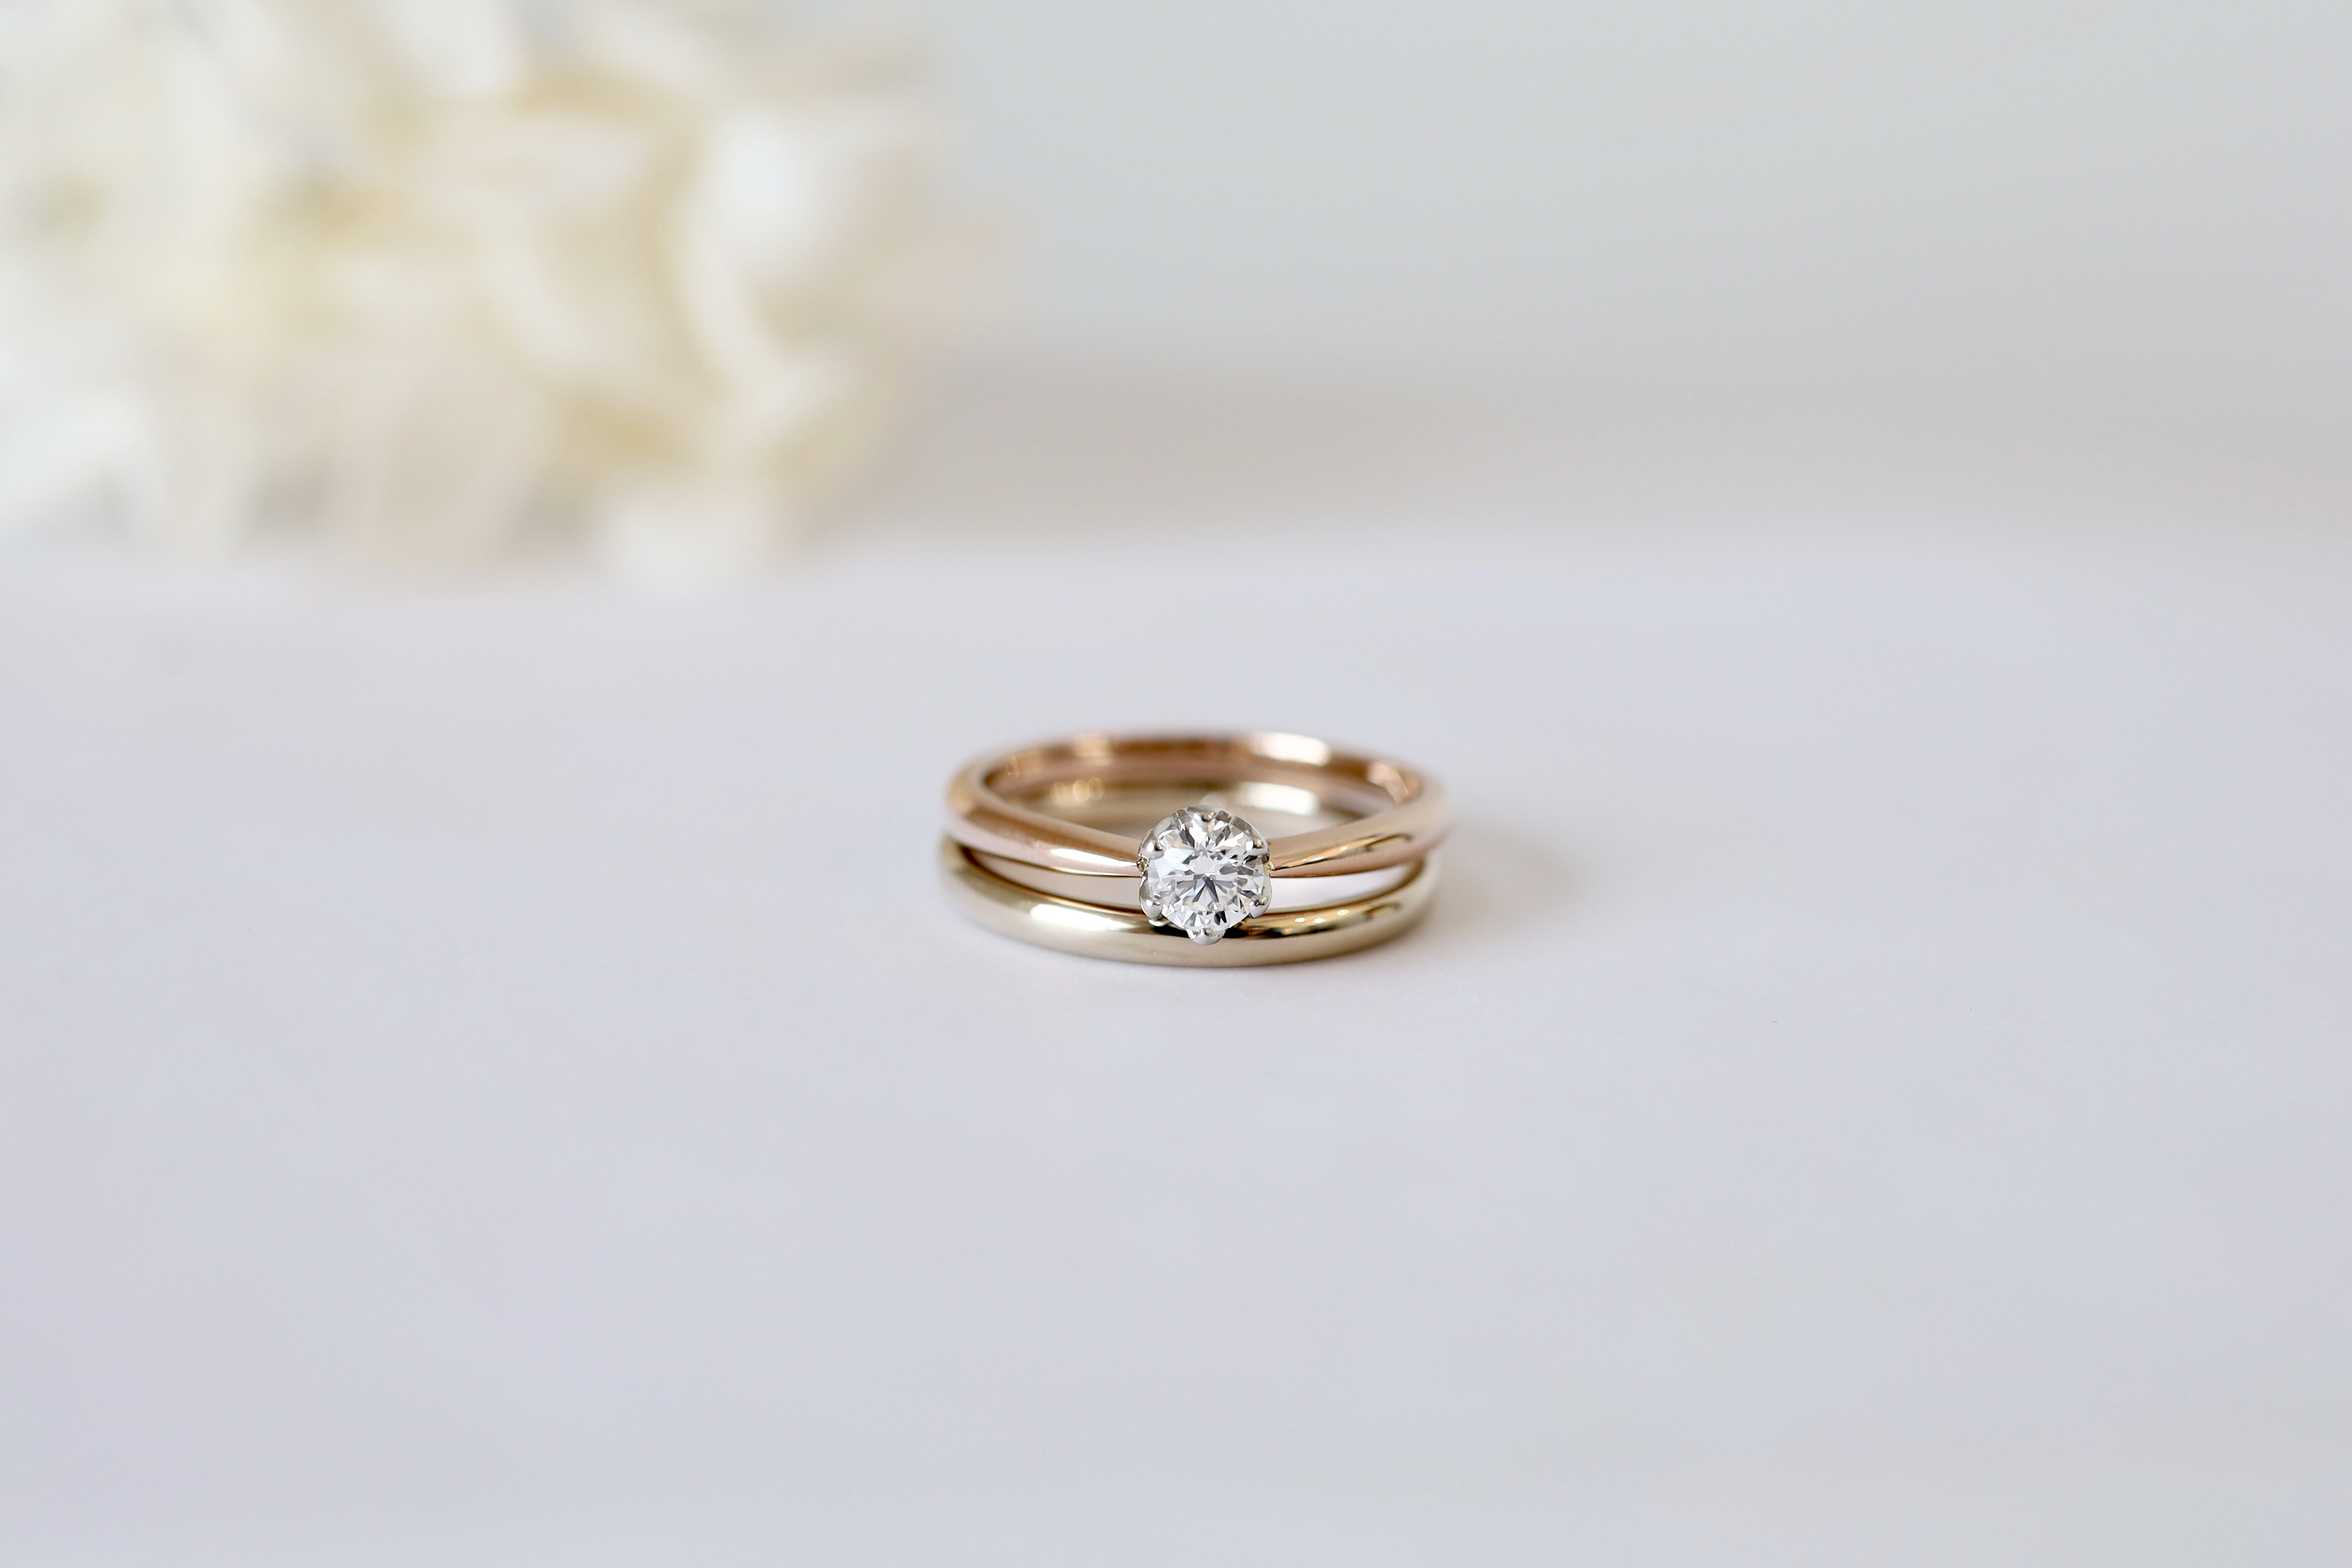 K18ピンクゴールドの婚約指輪とシャンパンゴールドの結婚指輪の重ね付け